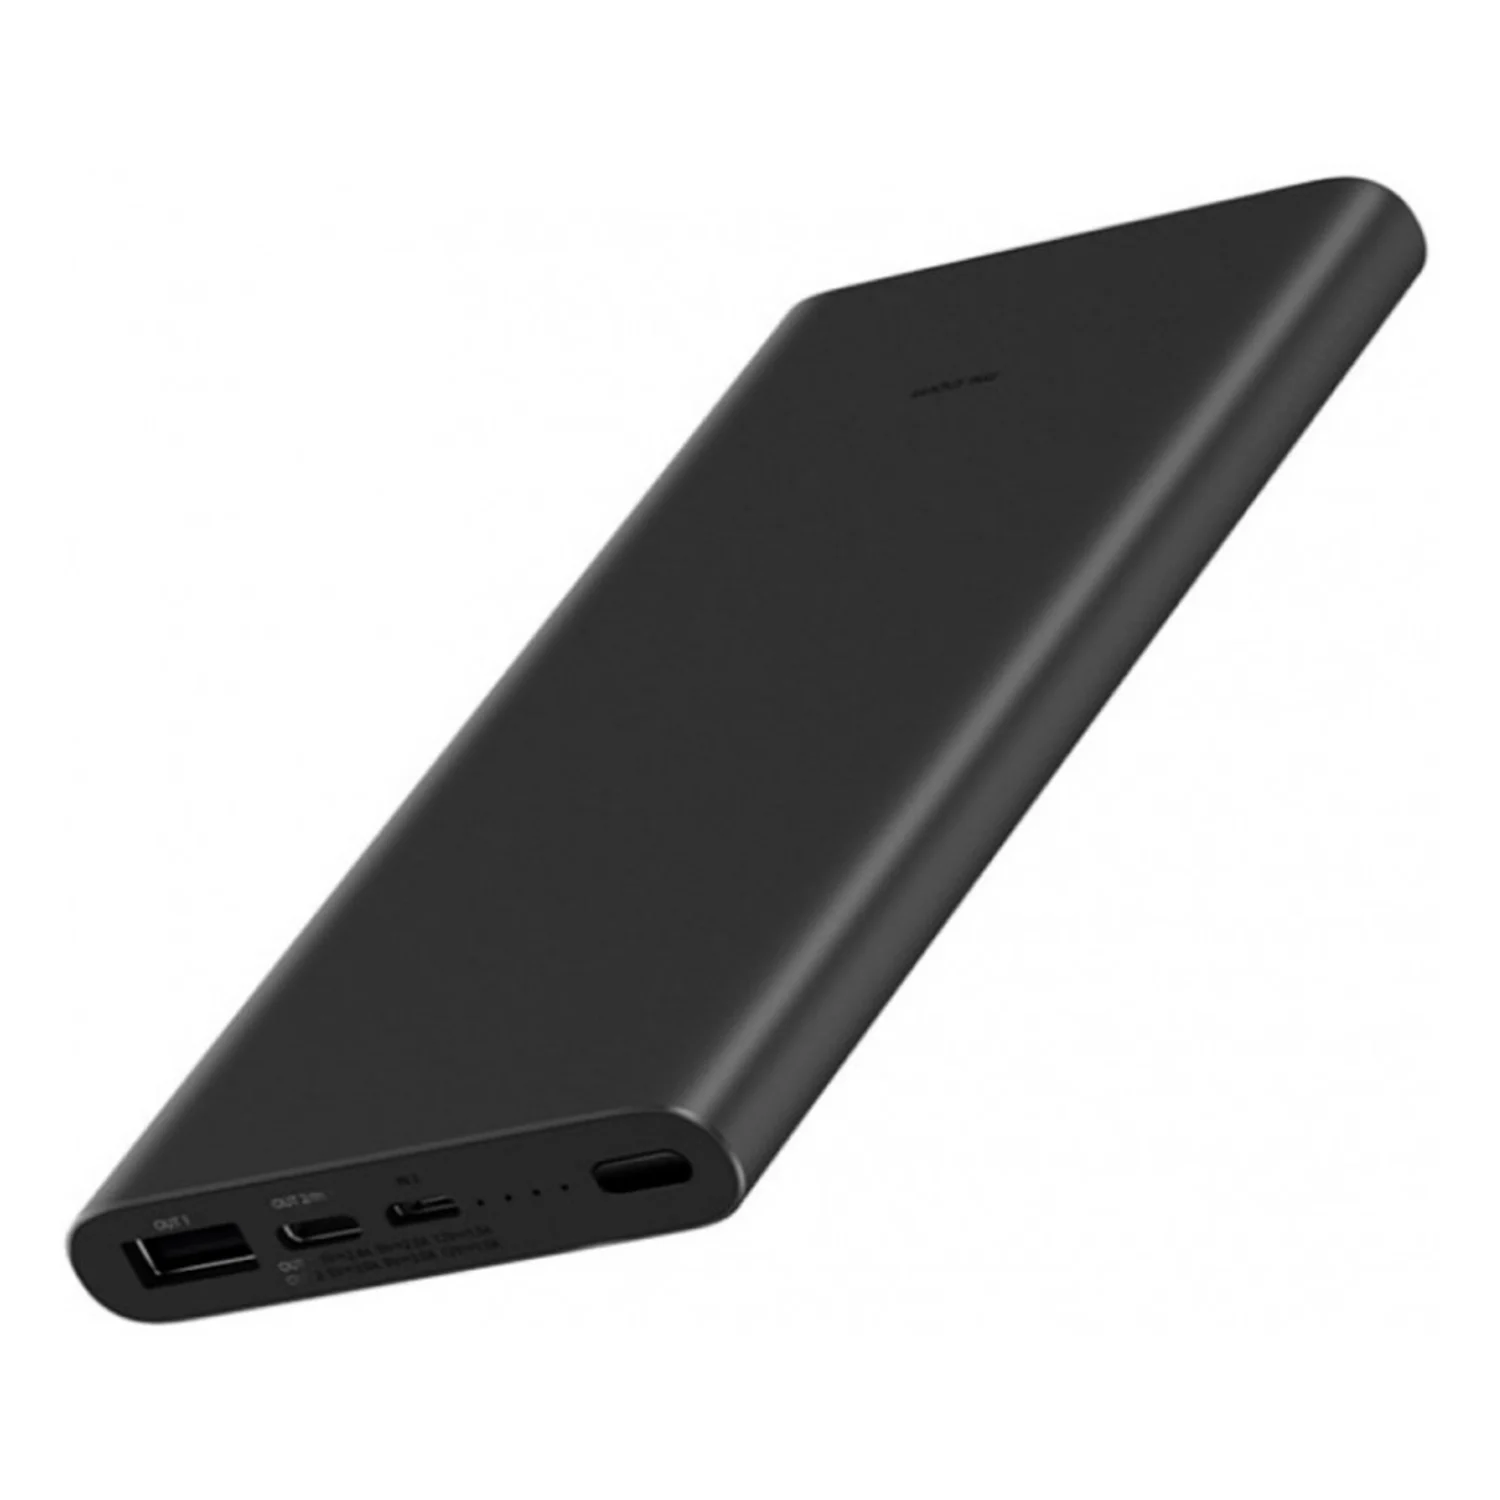 Carregador Portátil Xiaomi USB Mi Power Bank 3 PLM13ZM VXN4260 10.000MAH - Preto